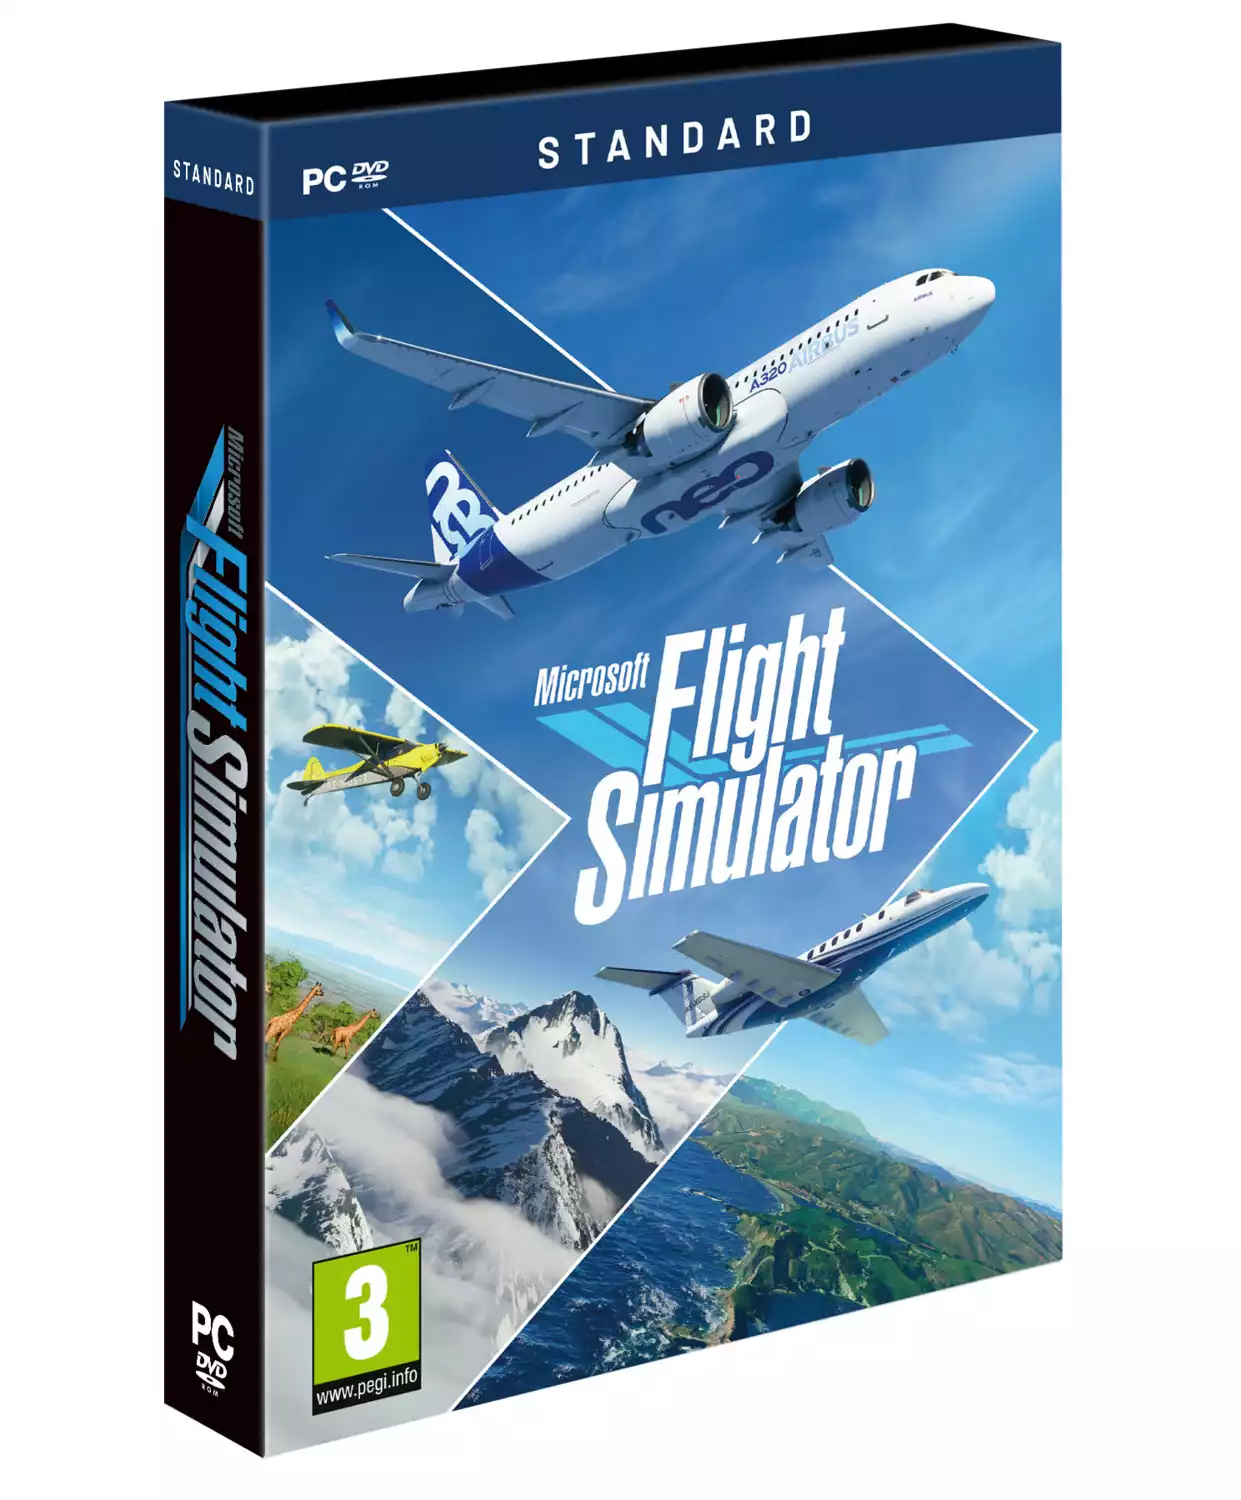 Igra Microsoft Flight Simulator 2020 za PC